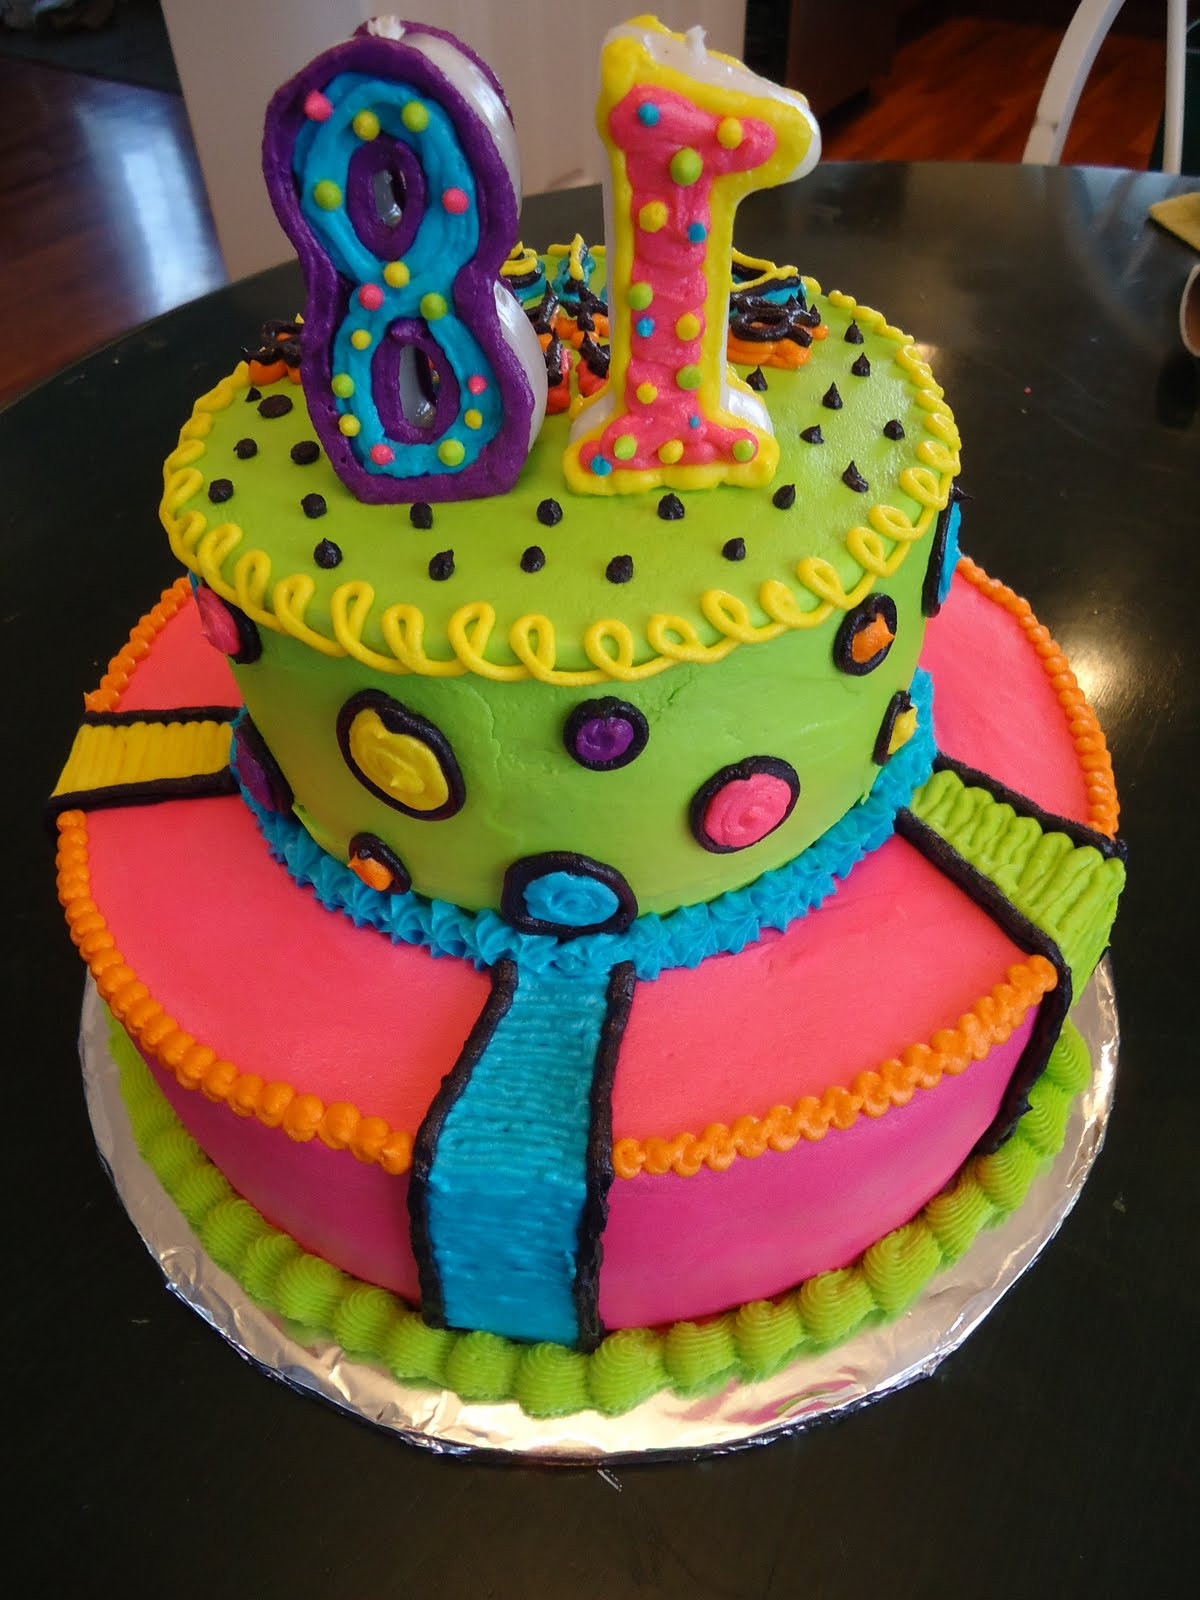 Neon Cakes For Birthdays
 Cat s Cake Creations NEON Lights BRIGHT BRIGHT BRIGHT